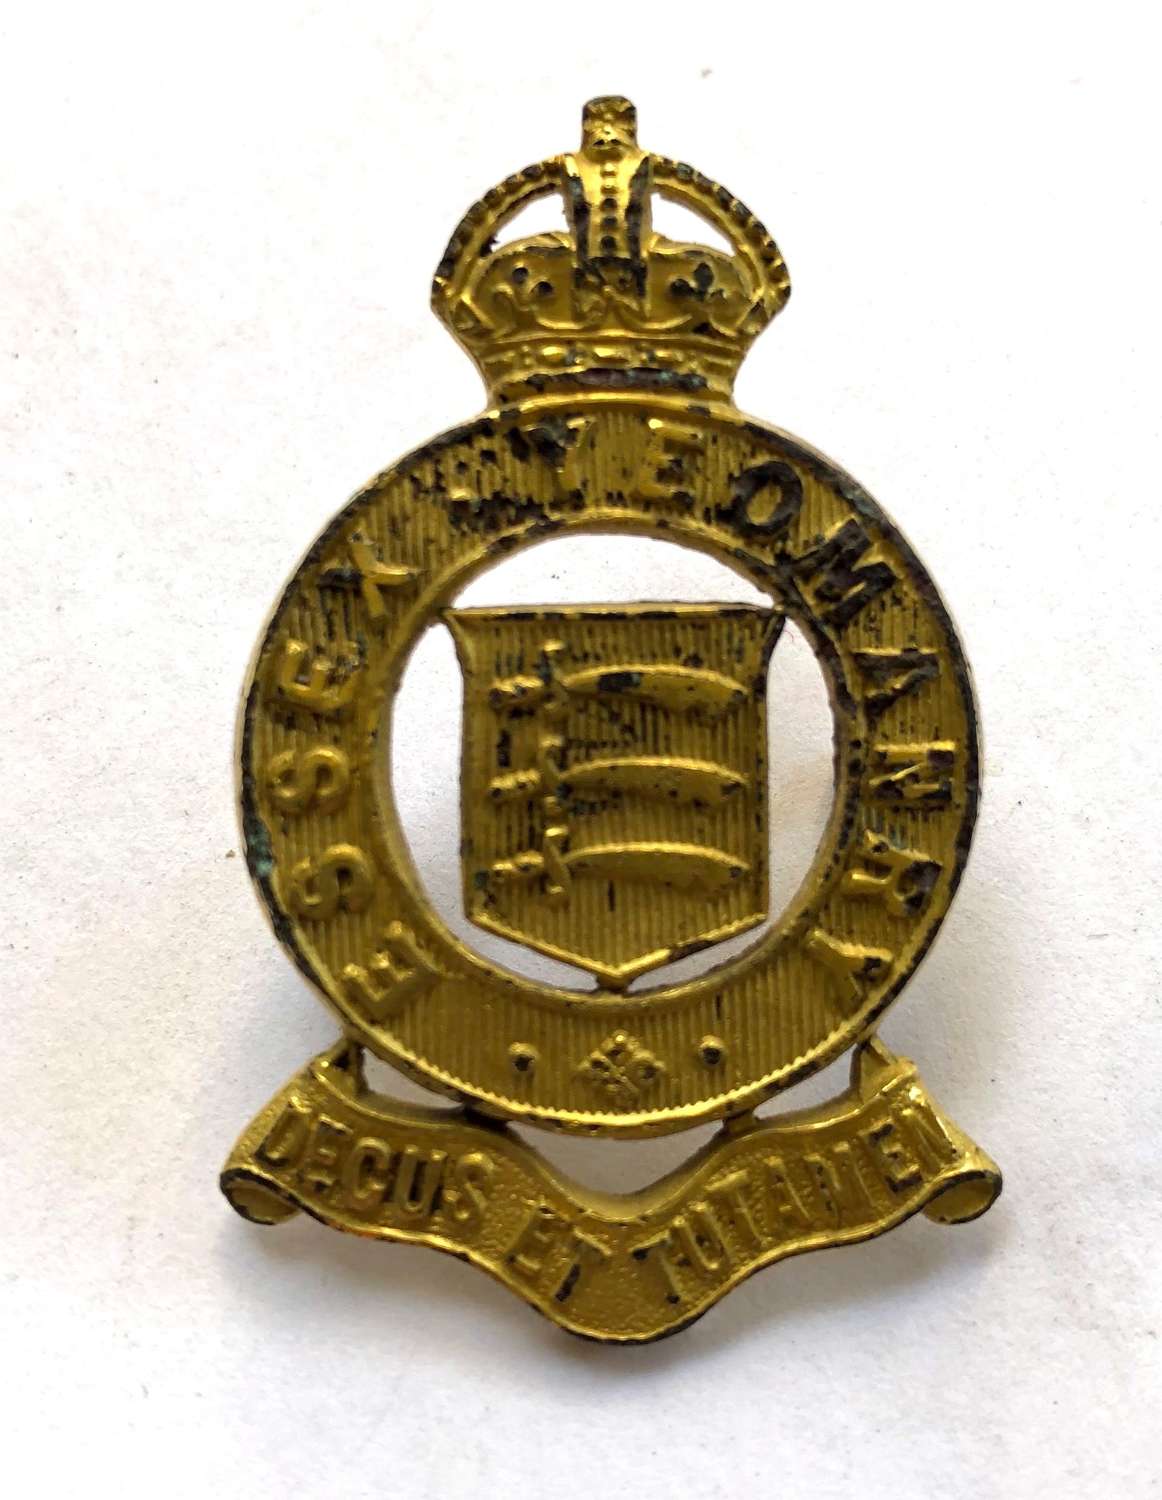 Essex Yeomanry Officer's post 1916 cap badge